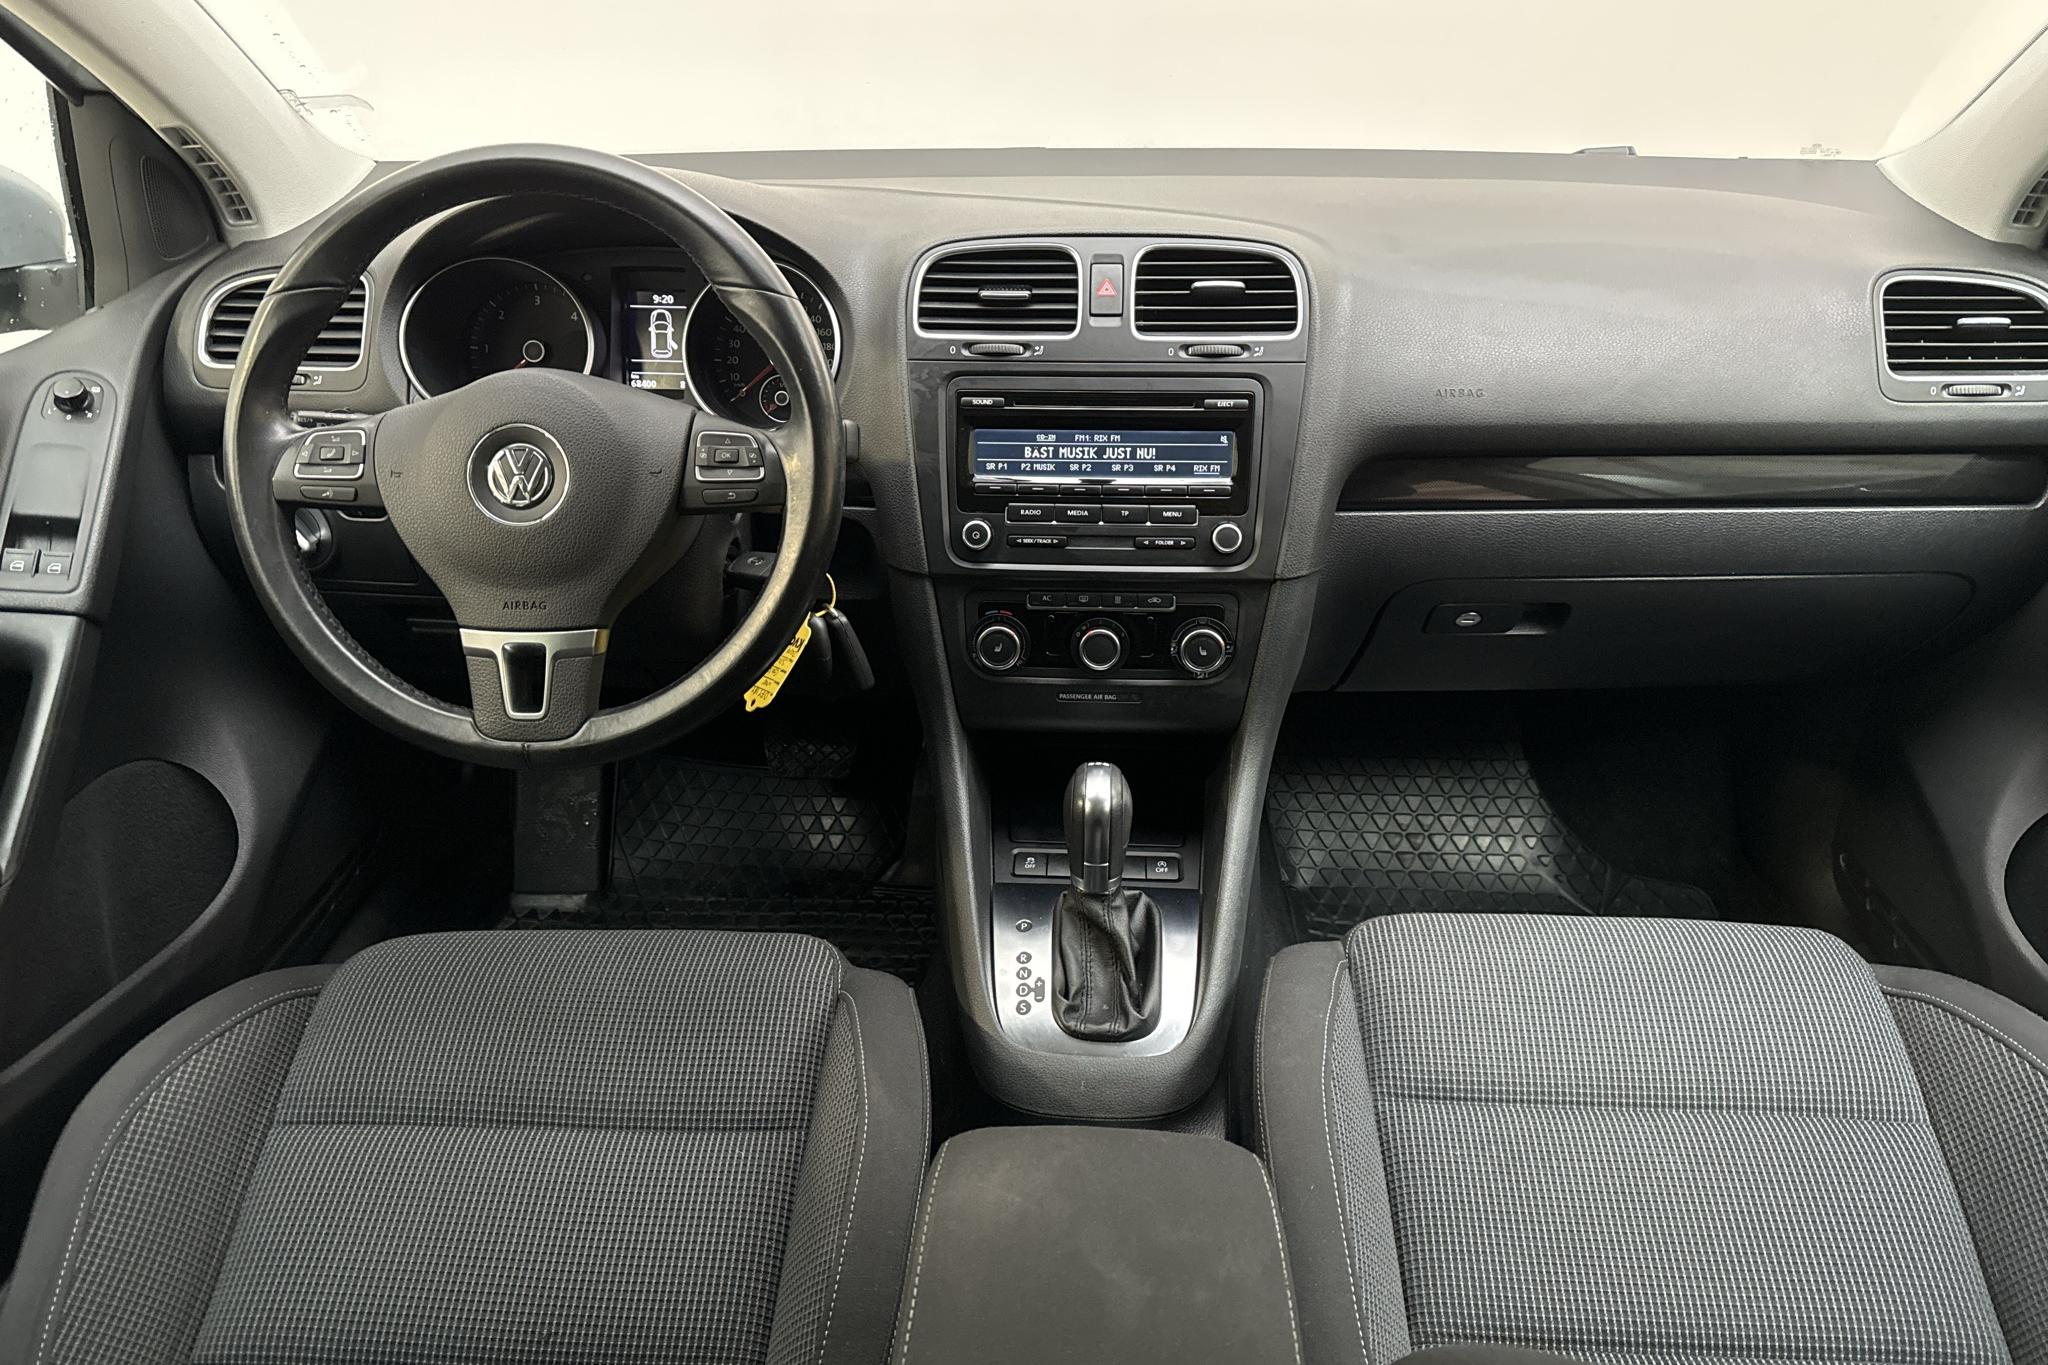 VW Golf VI 1.6 TDI BlueMotion Technology 5dr (105hk) - 68 390 km - Automatic - silver - 2012